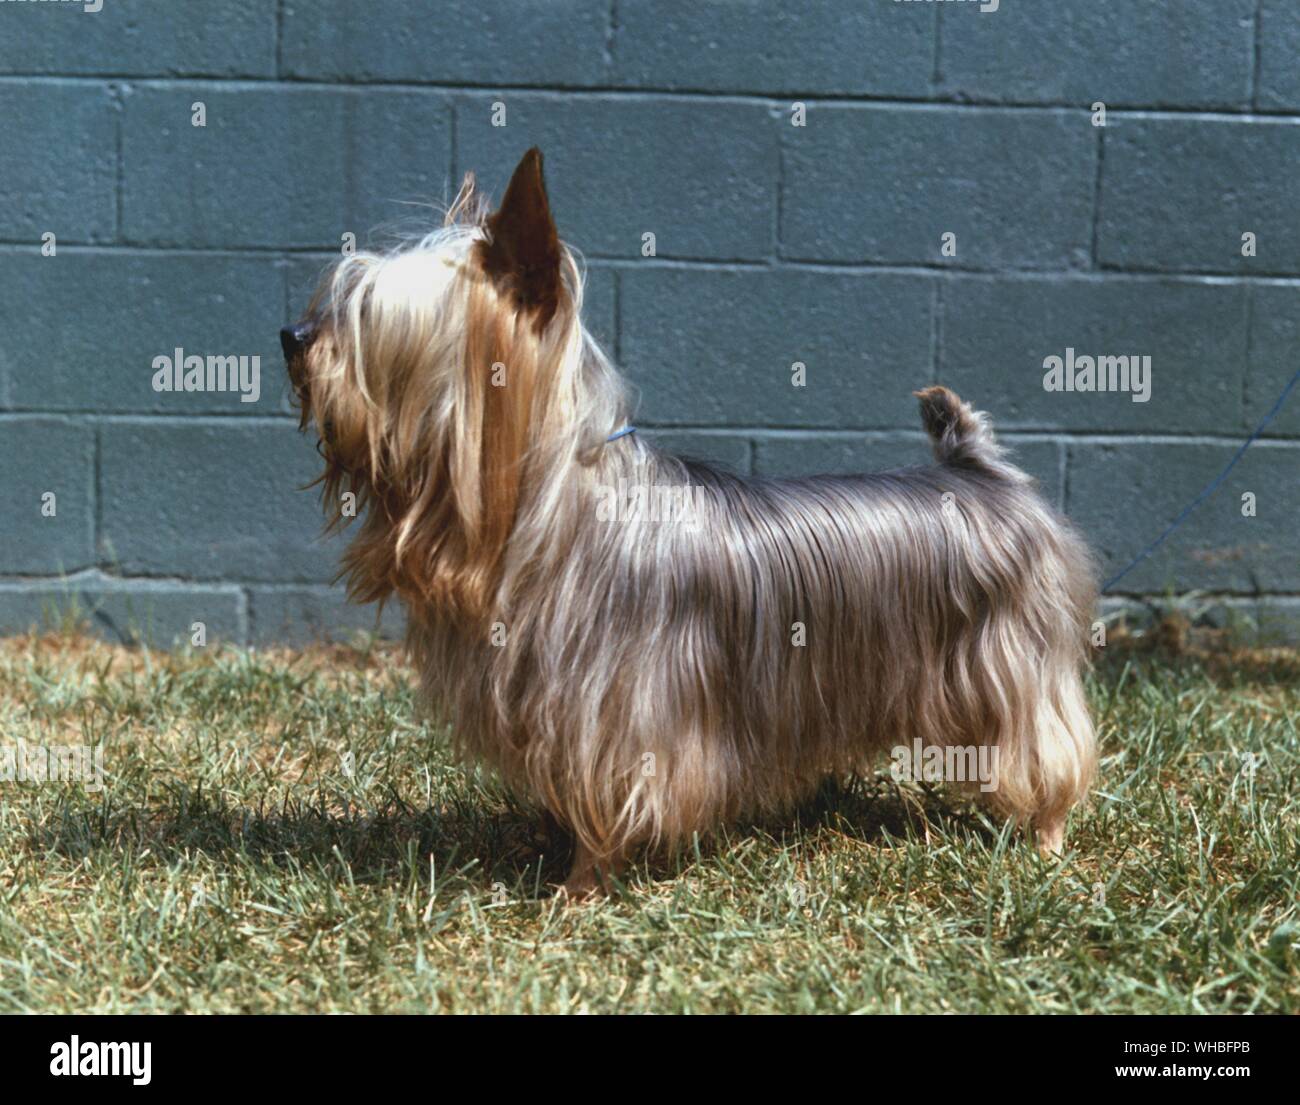 Australian Silky Terrier Stock Photo